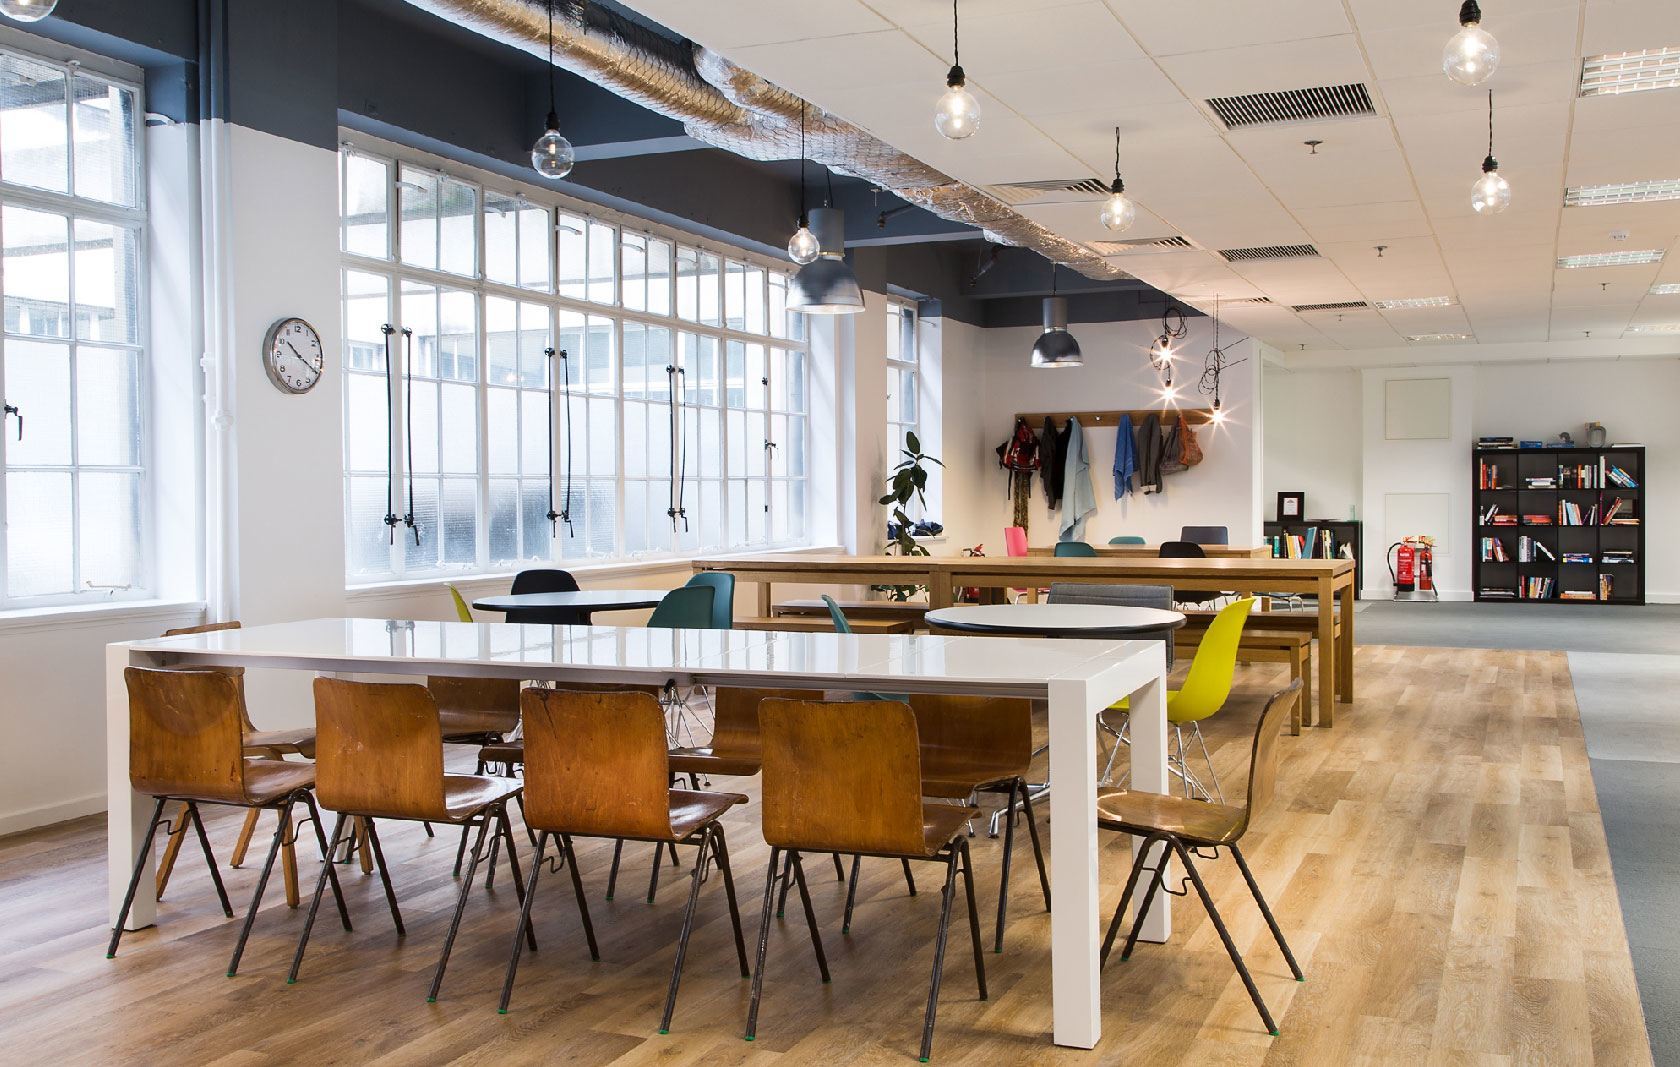 A Look Inside Moonfruit’s New London Headquarters